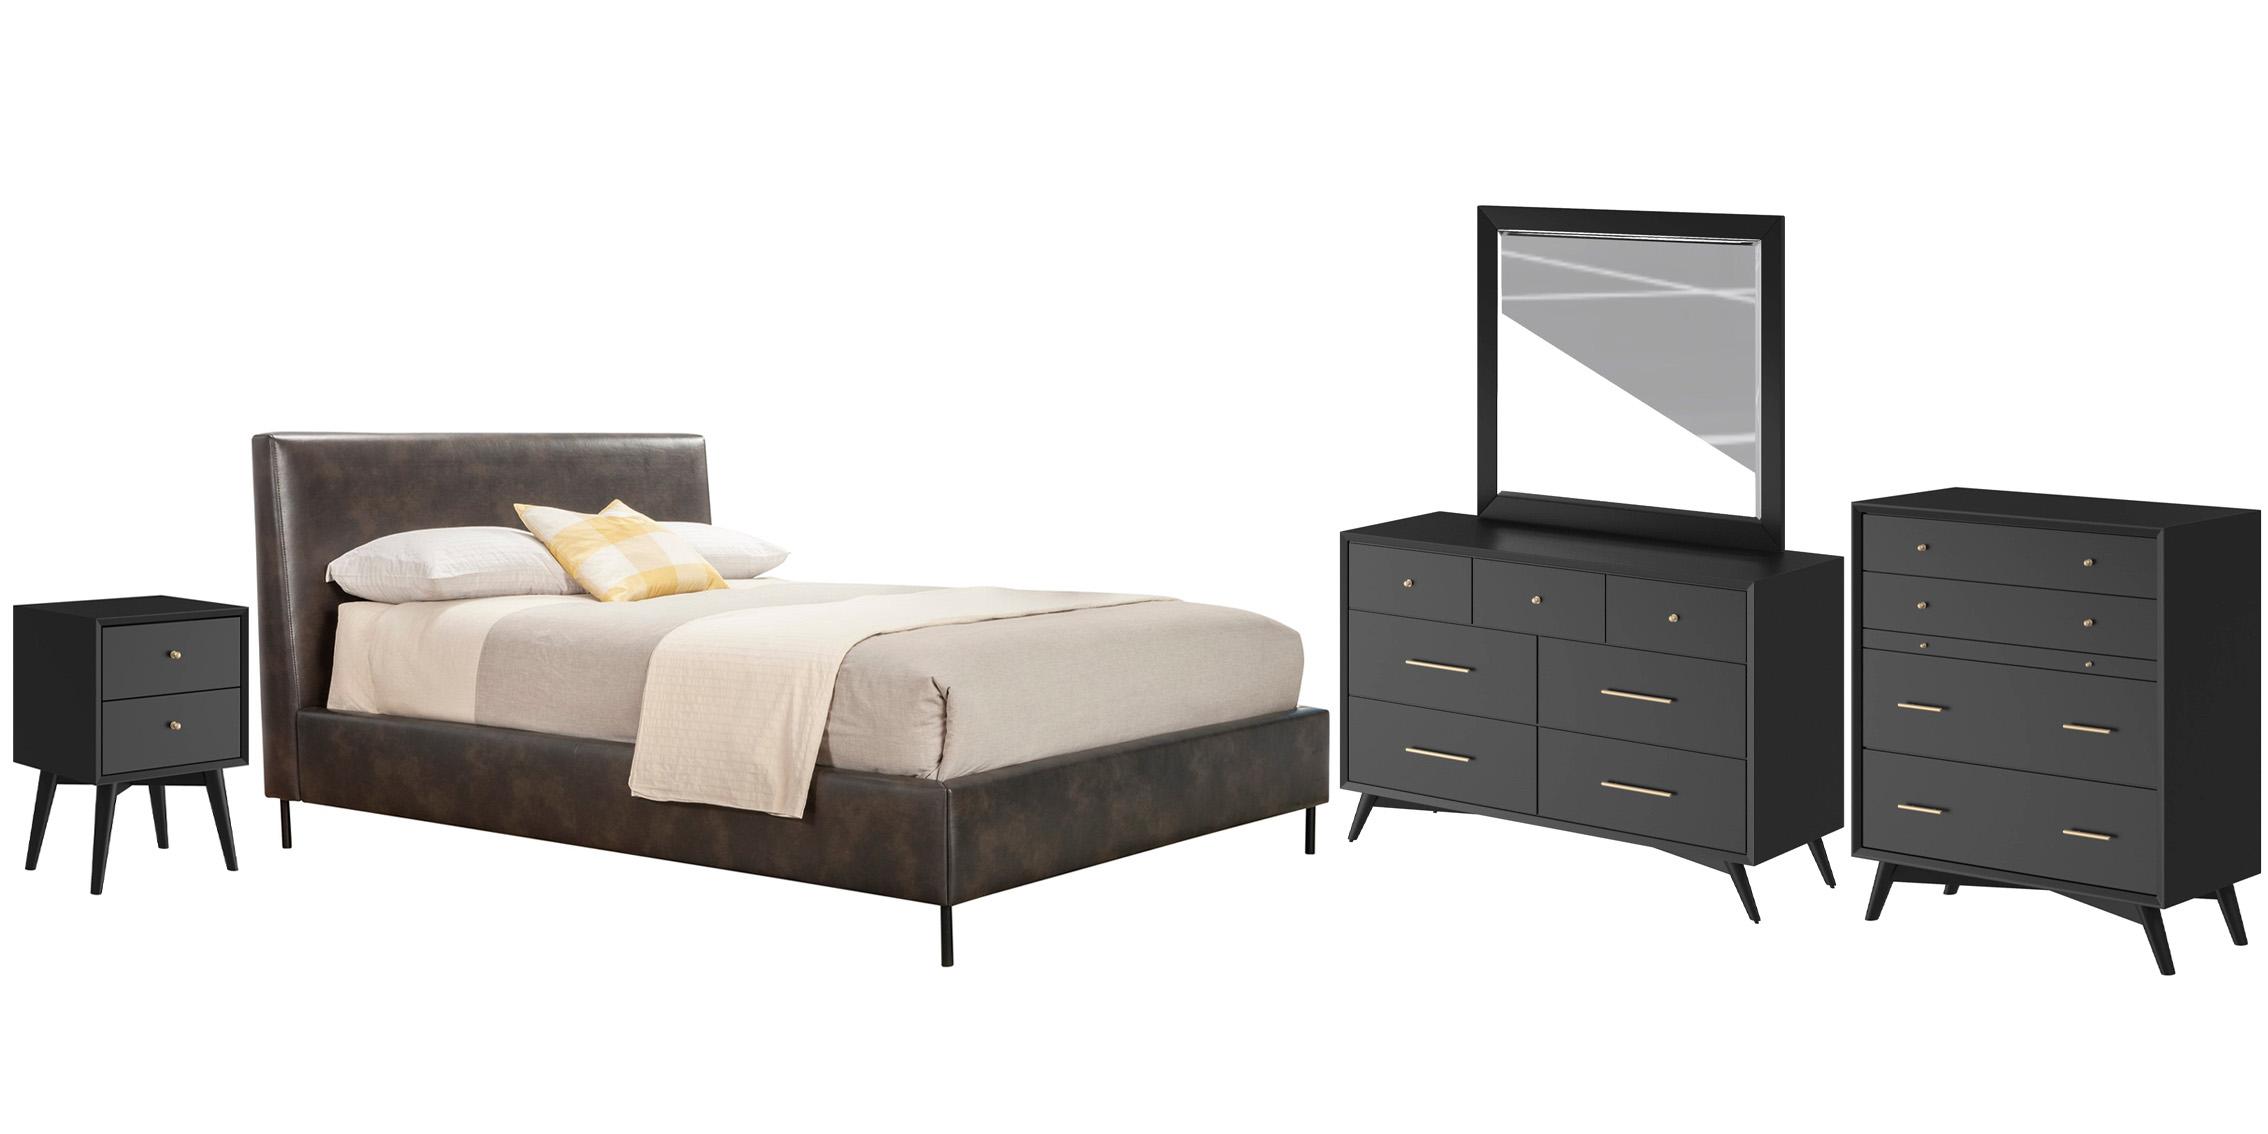 Modern Platform Bedroom Set SOPHIA / FLYNN 6902Q-GRY-Set-5-BLK in Gray, Black Faux Leather